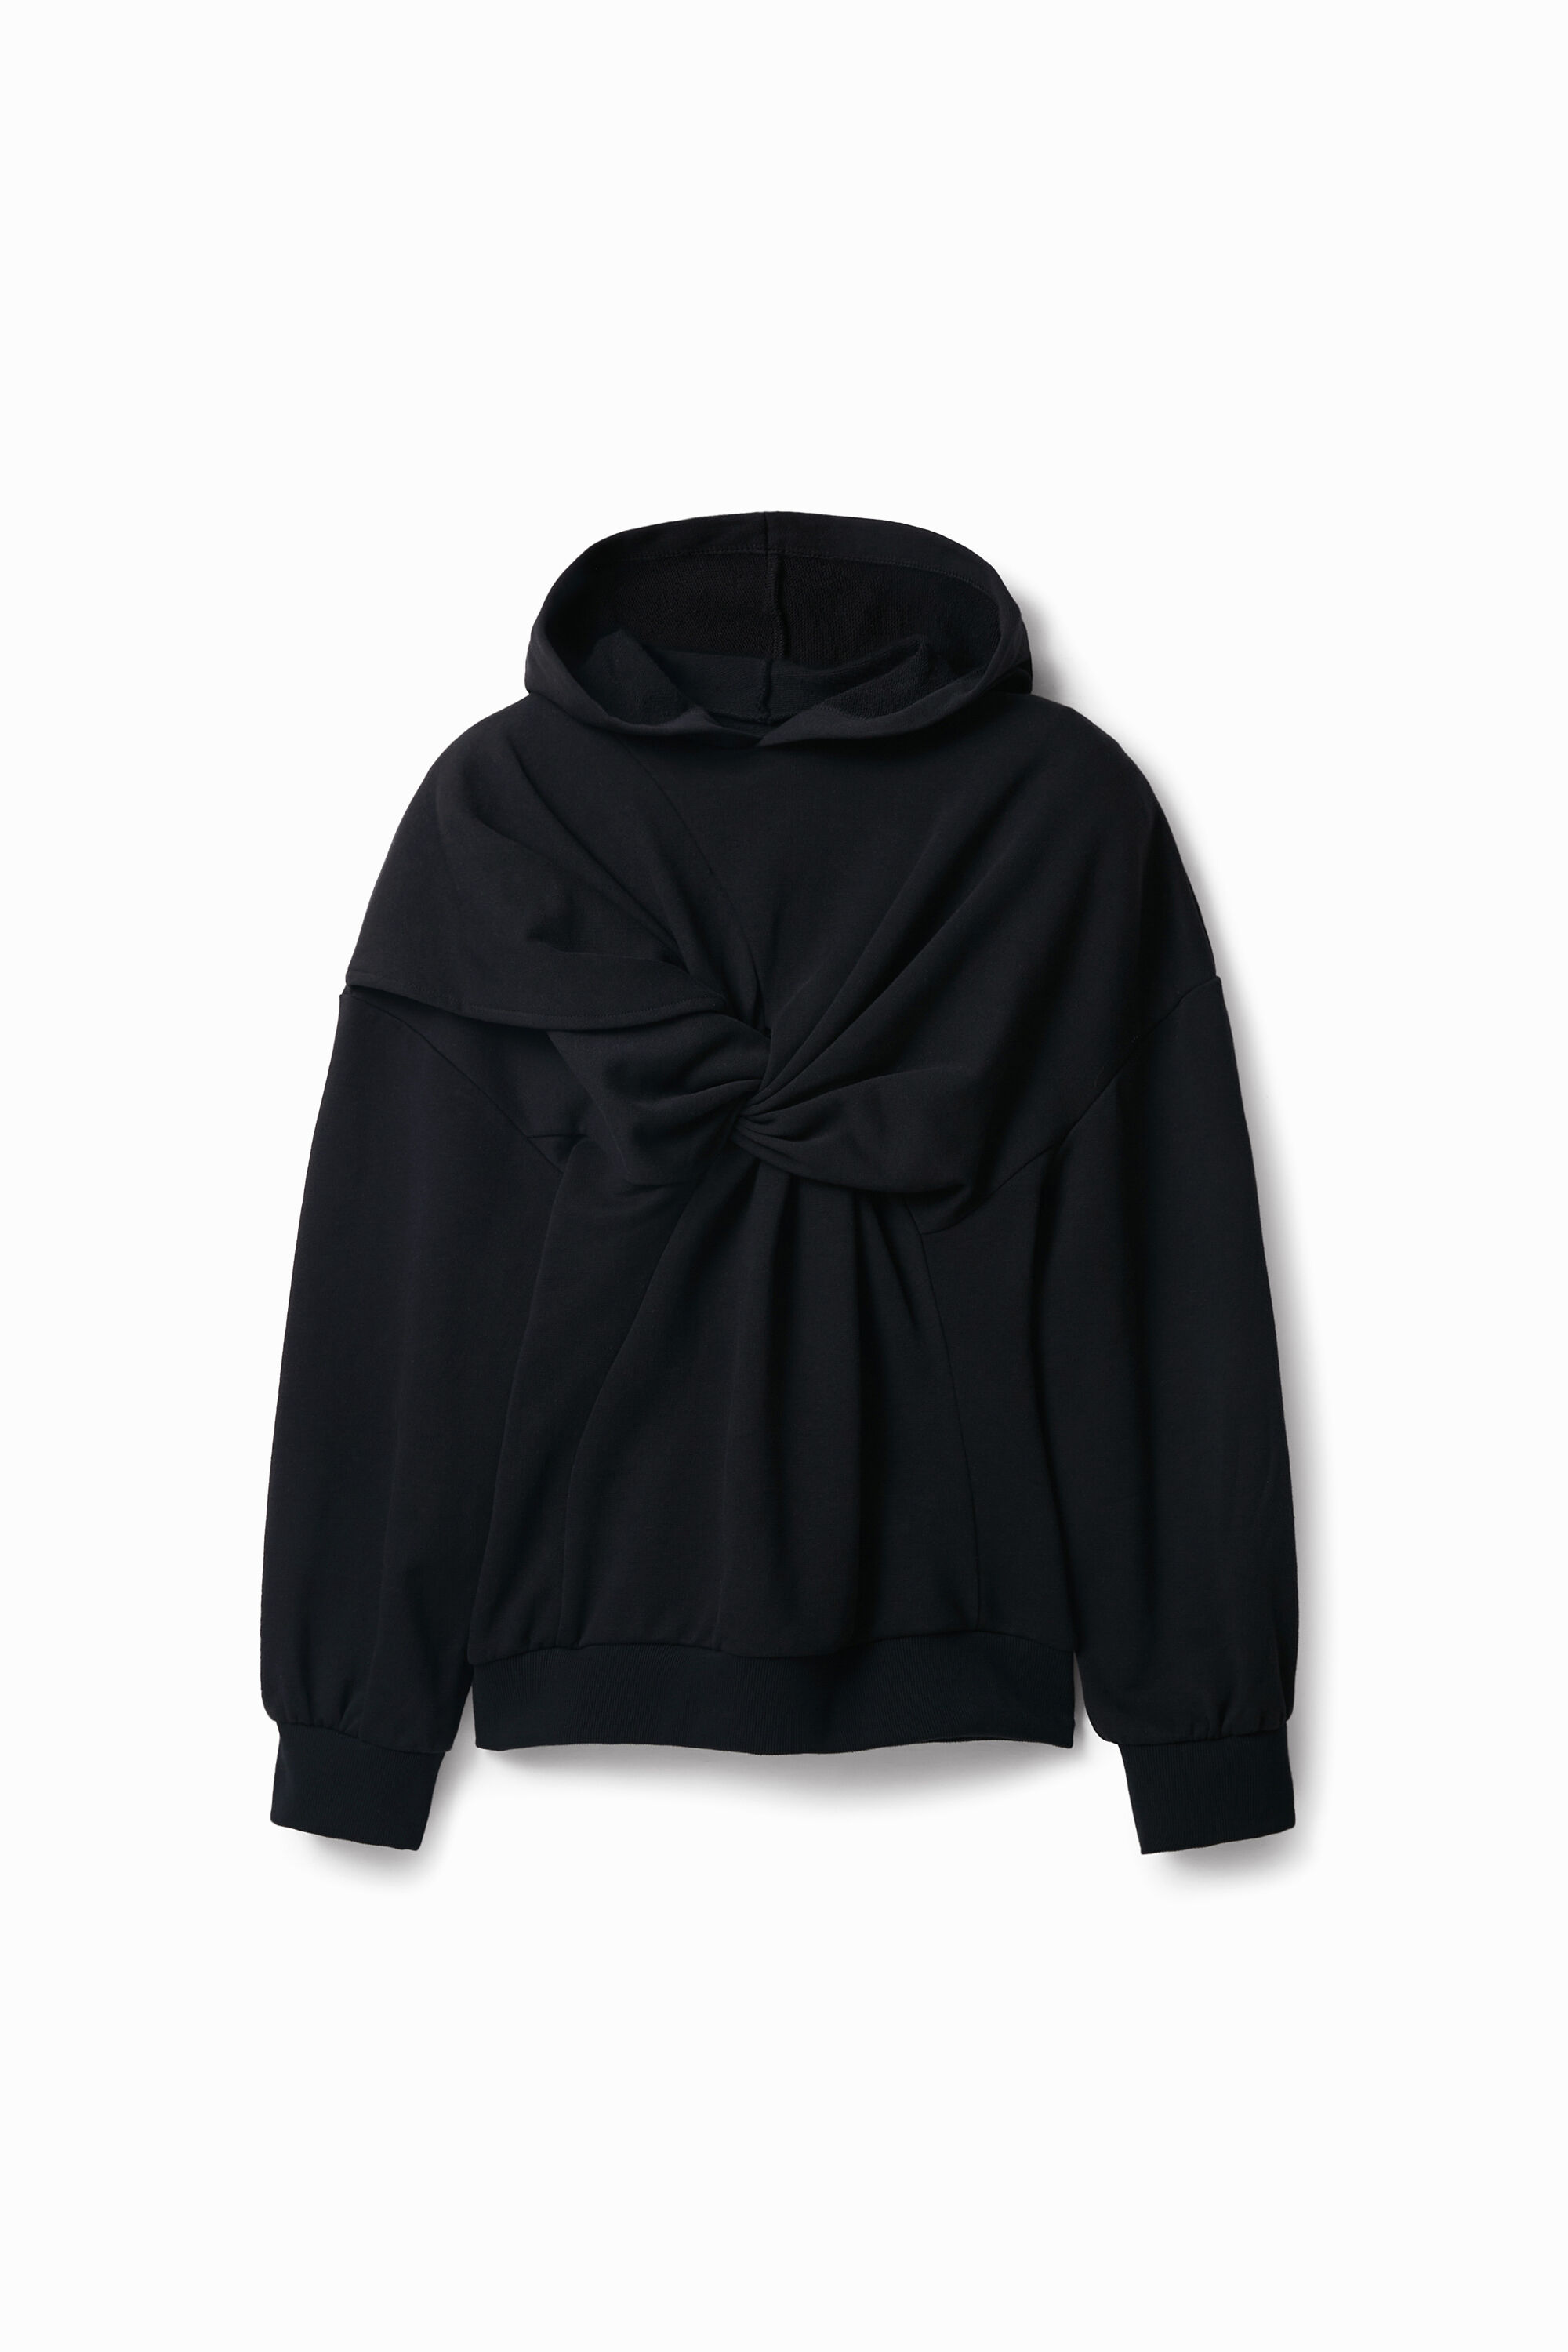 Maitrepierre knot hooded sweatshirt - BLACK - S